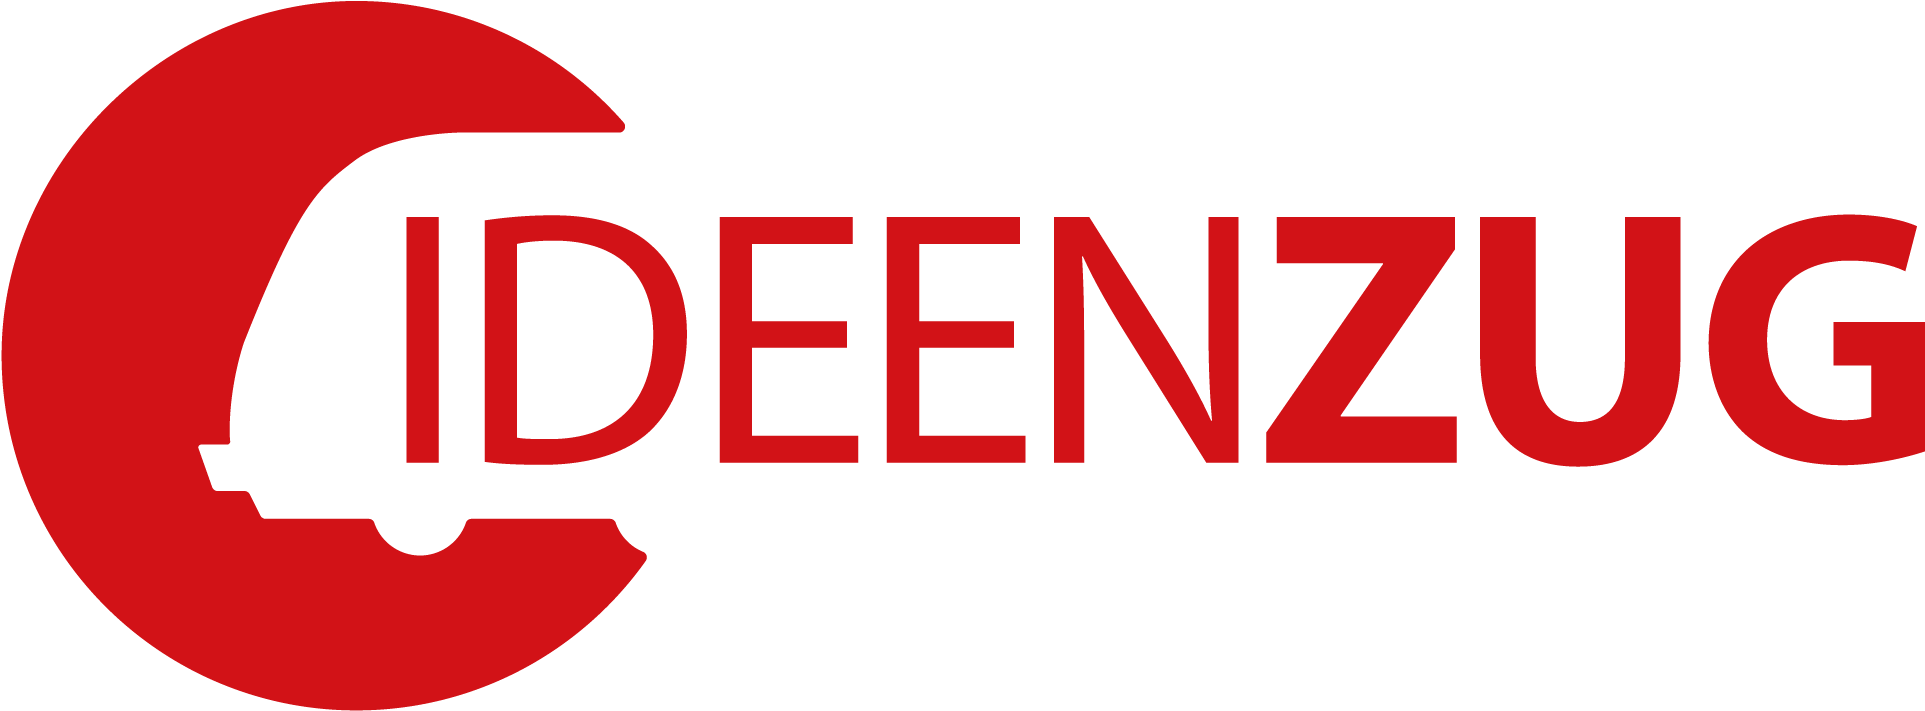 Eventtender Is A Development Partner Of Deutsche Bahn - Ideenzug Db Clipart (2364x1182), Png Download